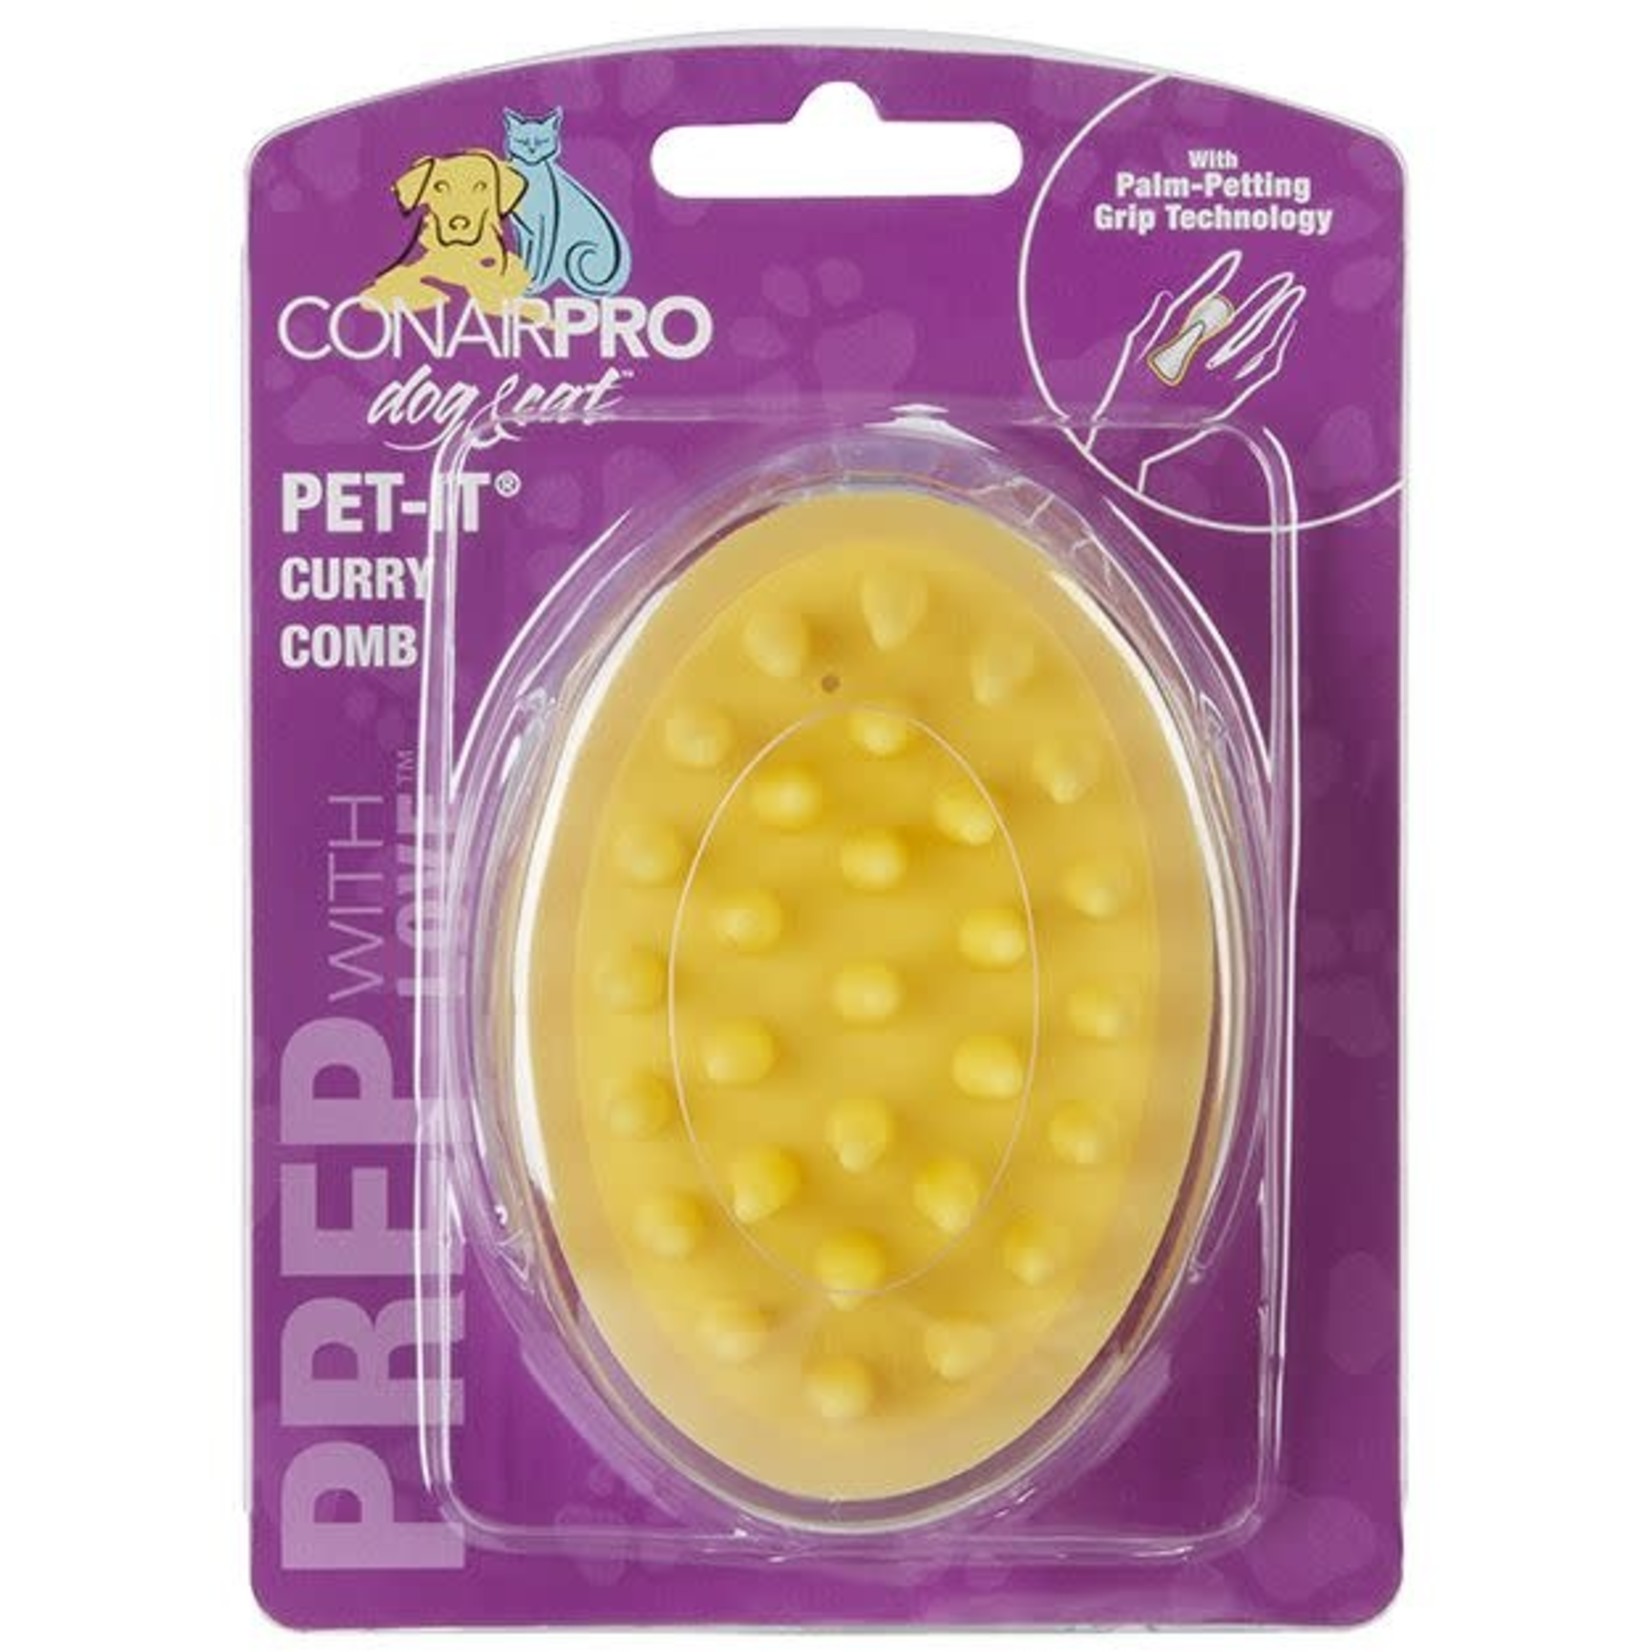 CONAIR CORPORATION Pet-It Curry Comb